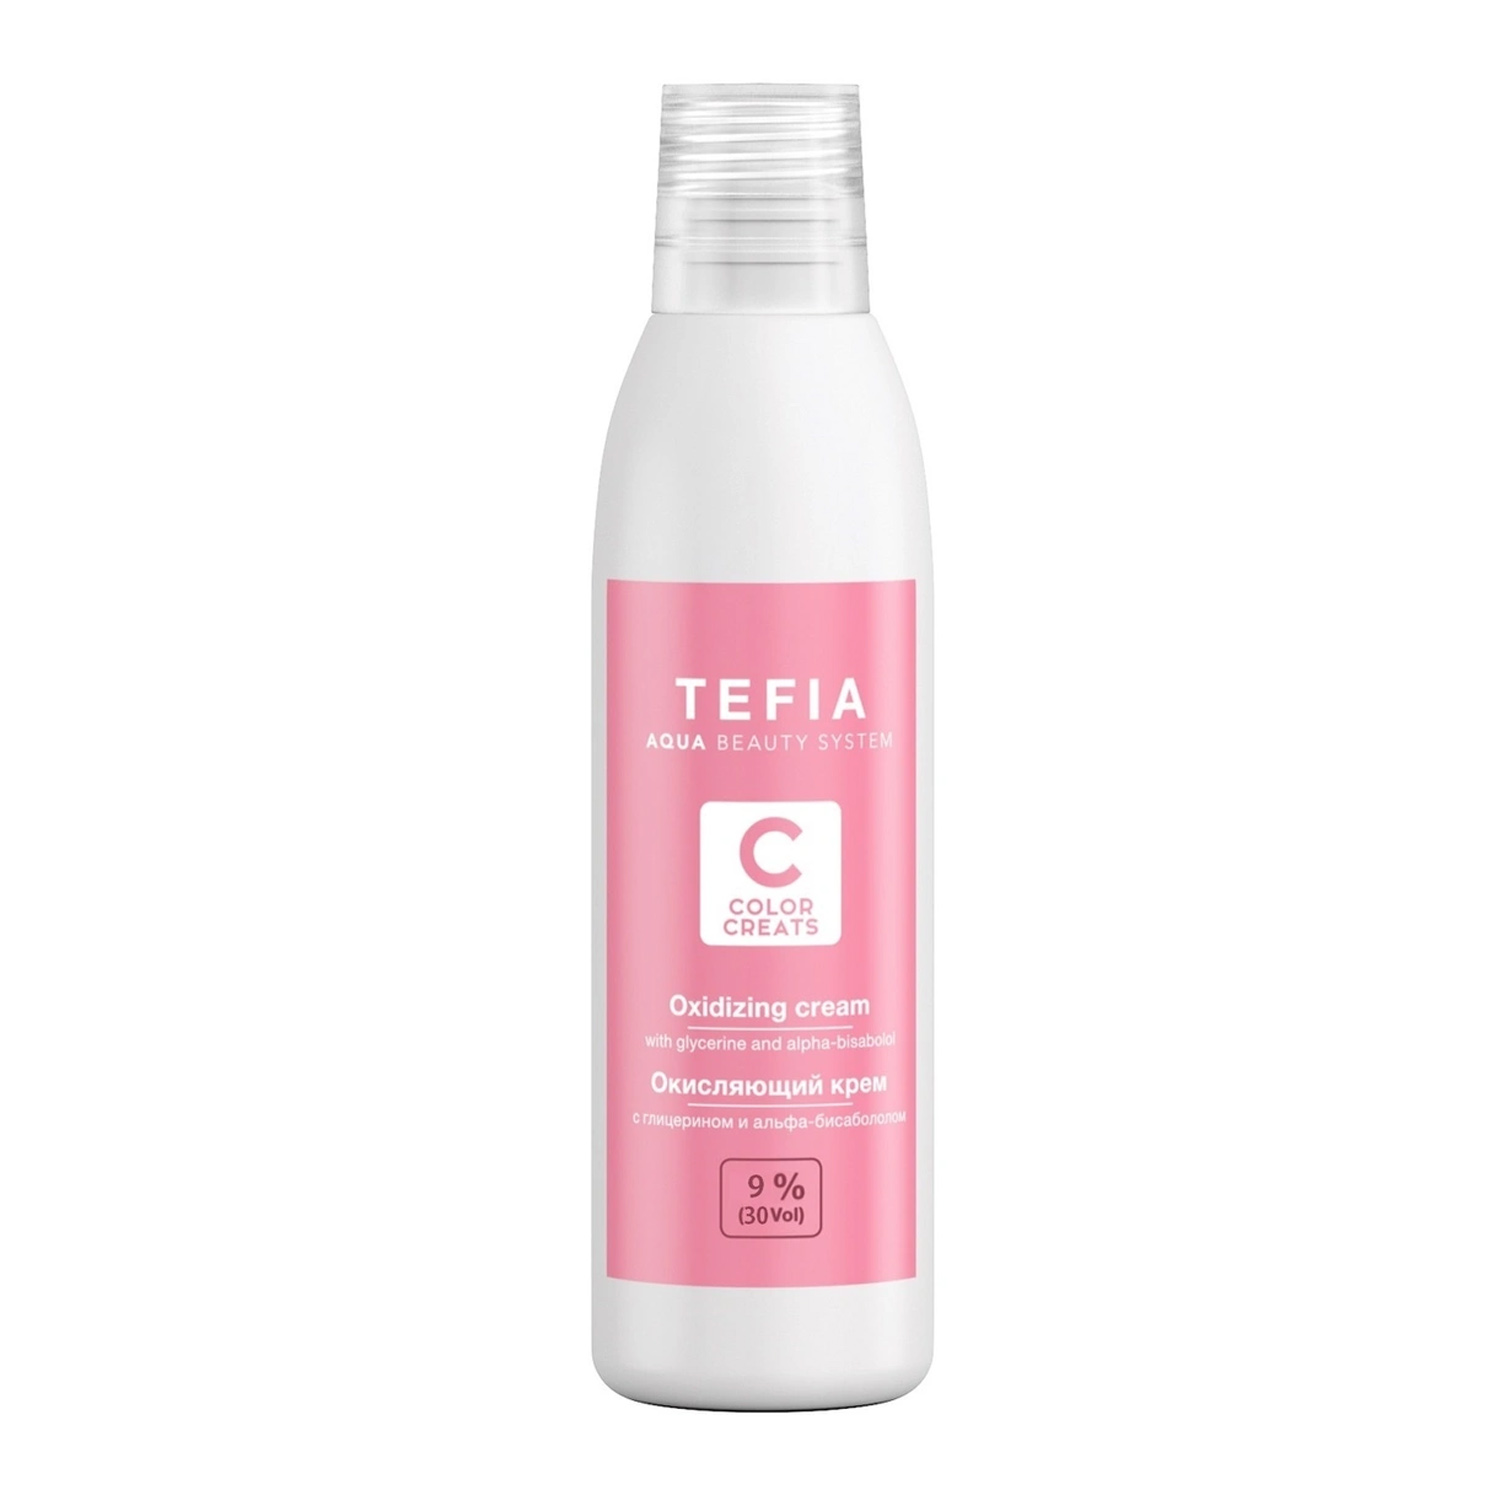 Tefia Окисляющий крем с глицерином и альфа-бисабололом 9% vol. 30, 120 мл (Tefia, Color Creats)